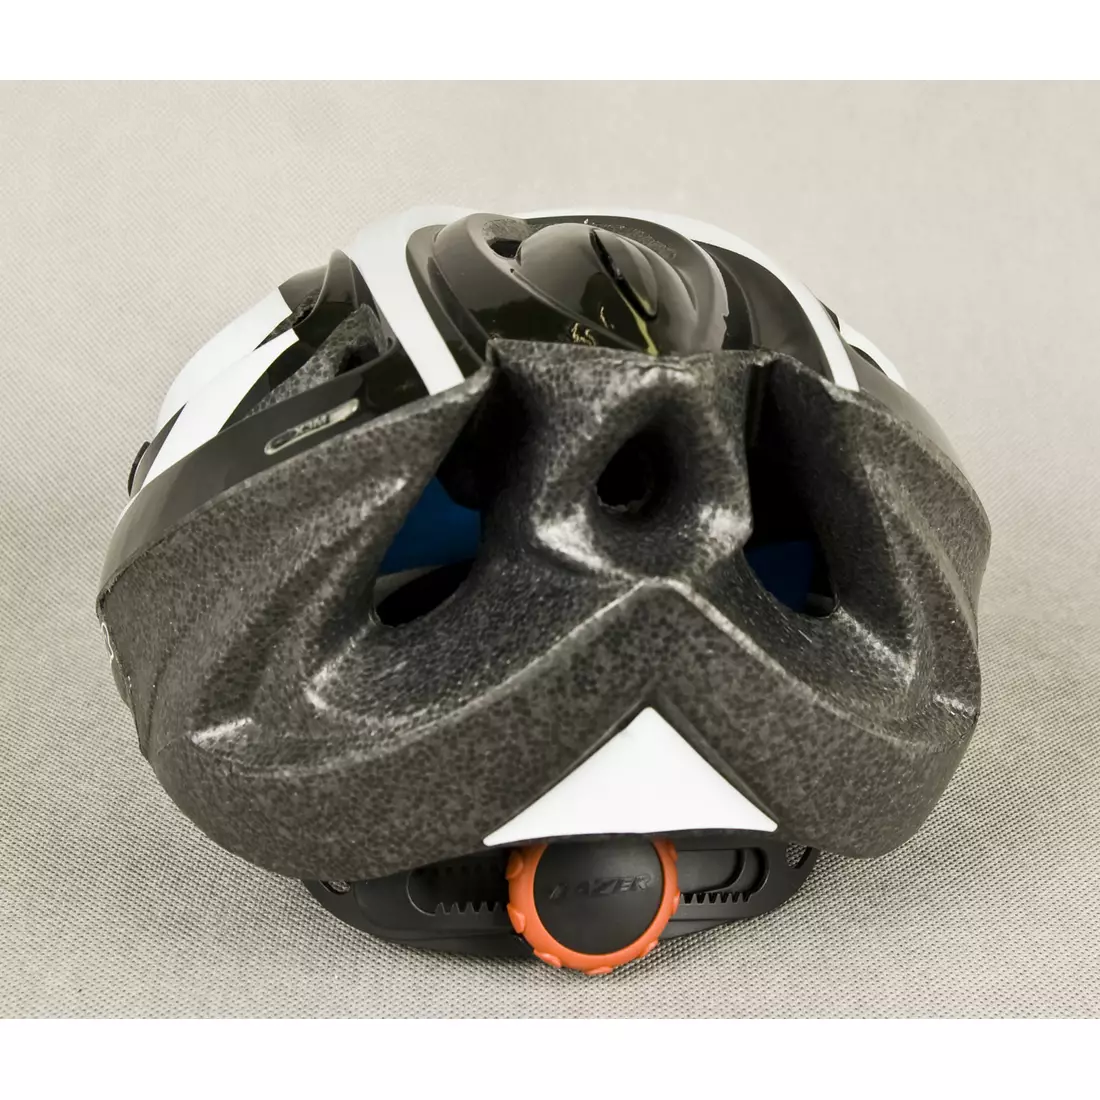 LAZER X3M MTB bicycle helmet, black and silver